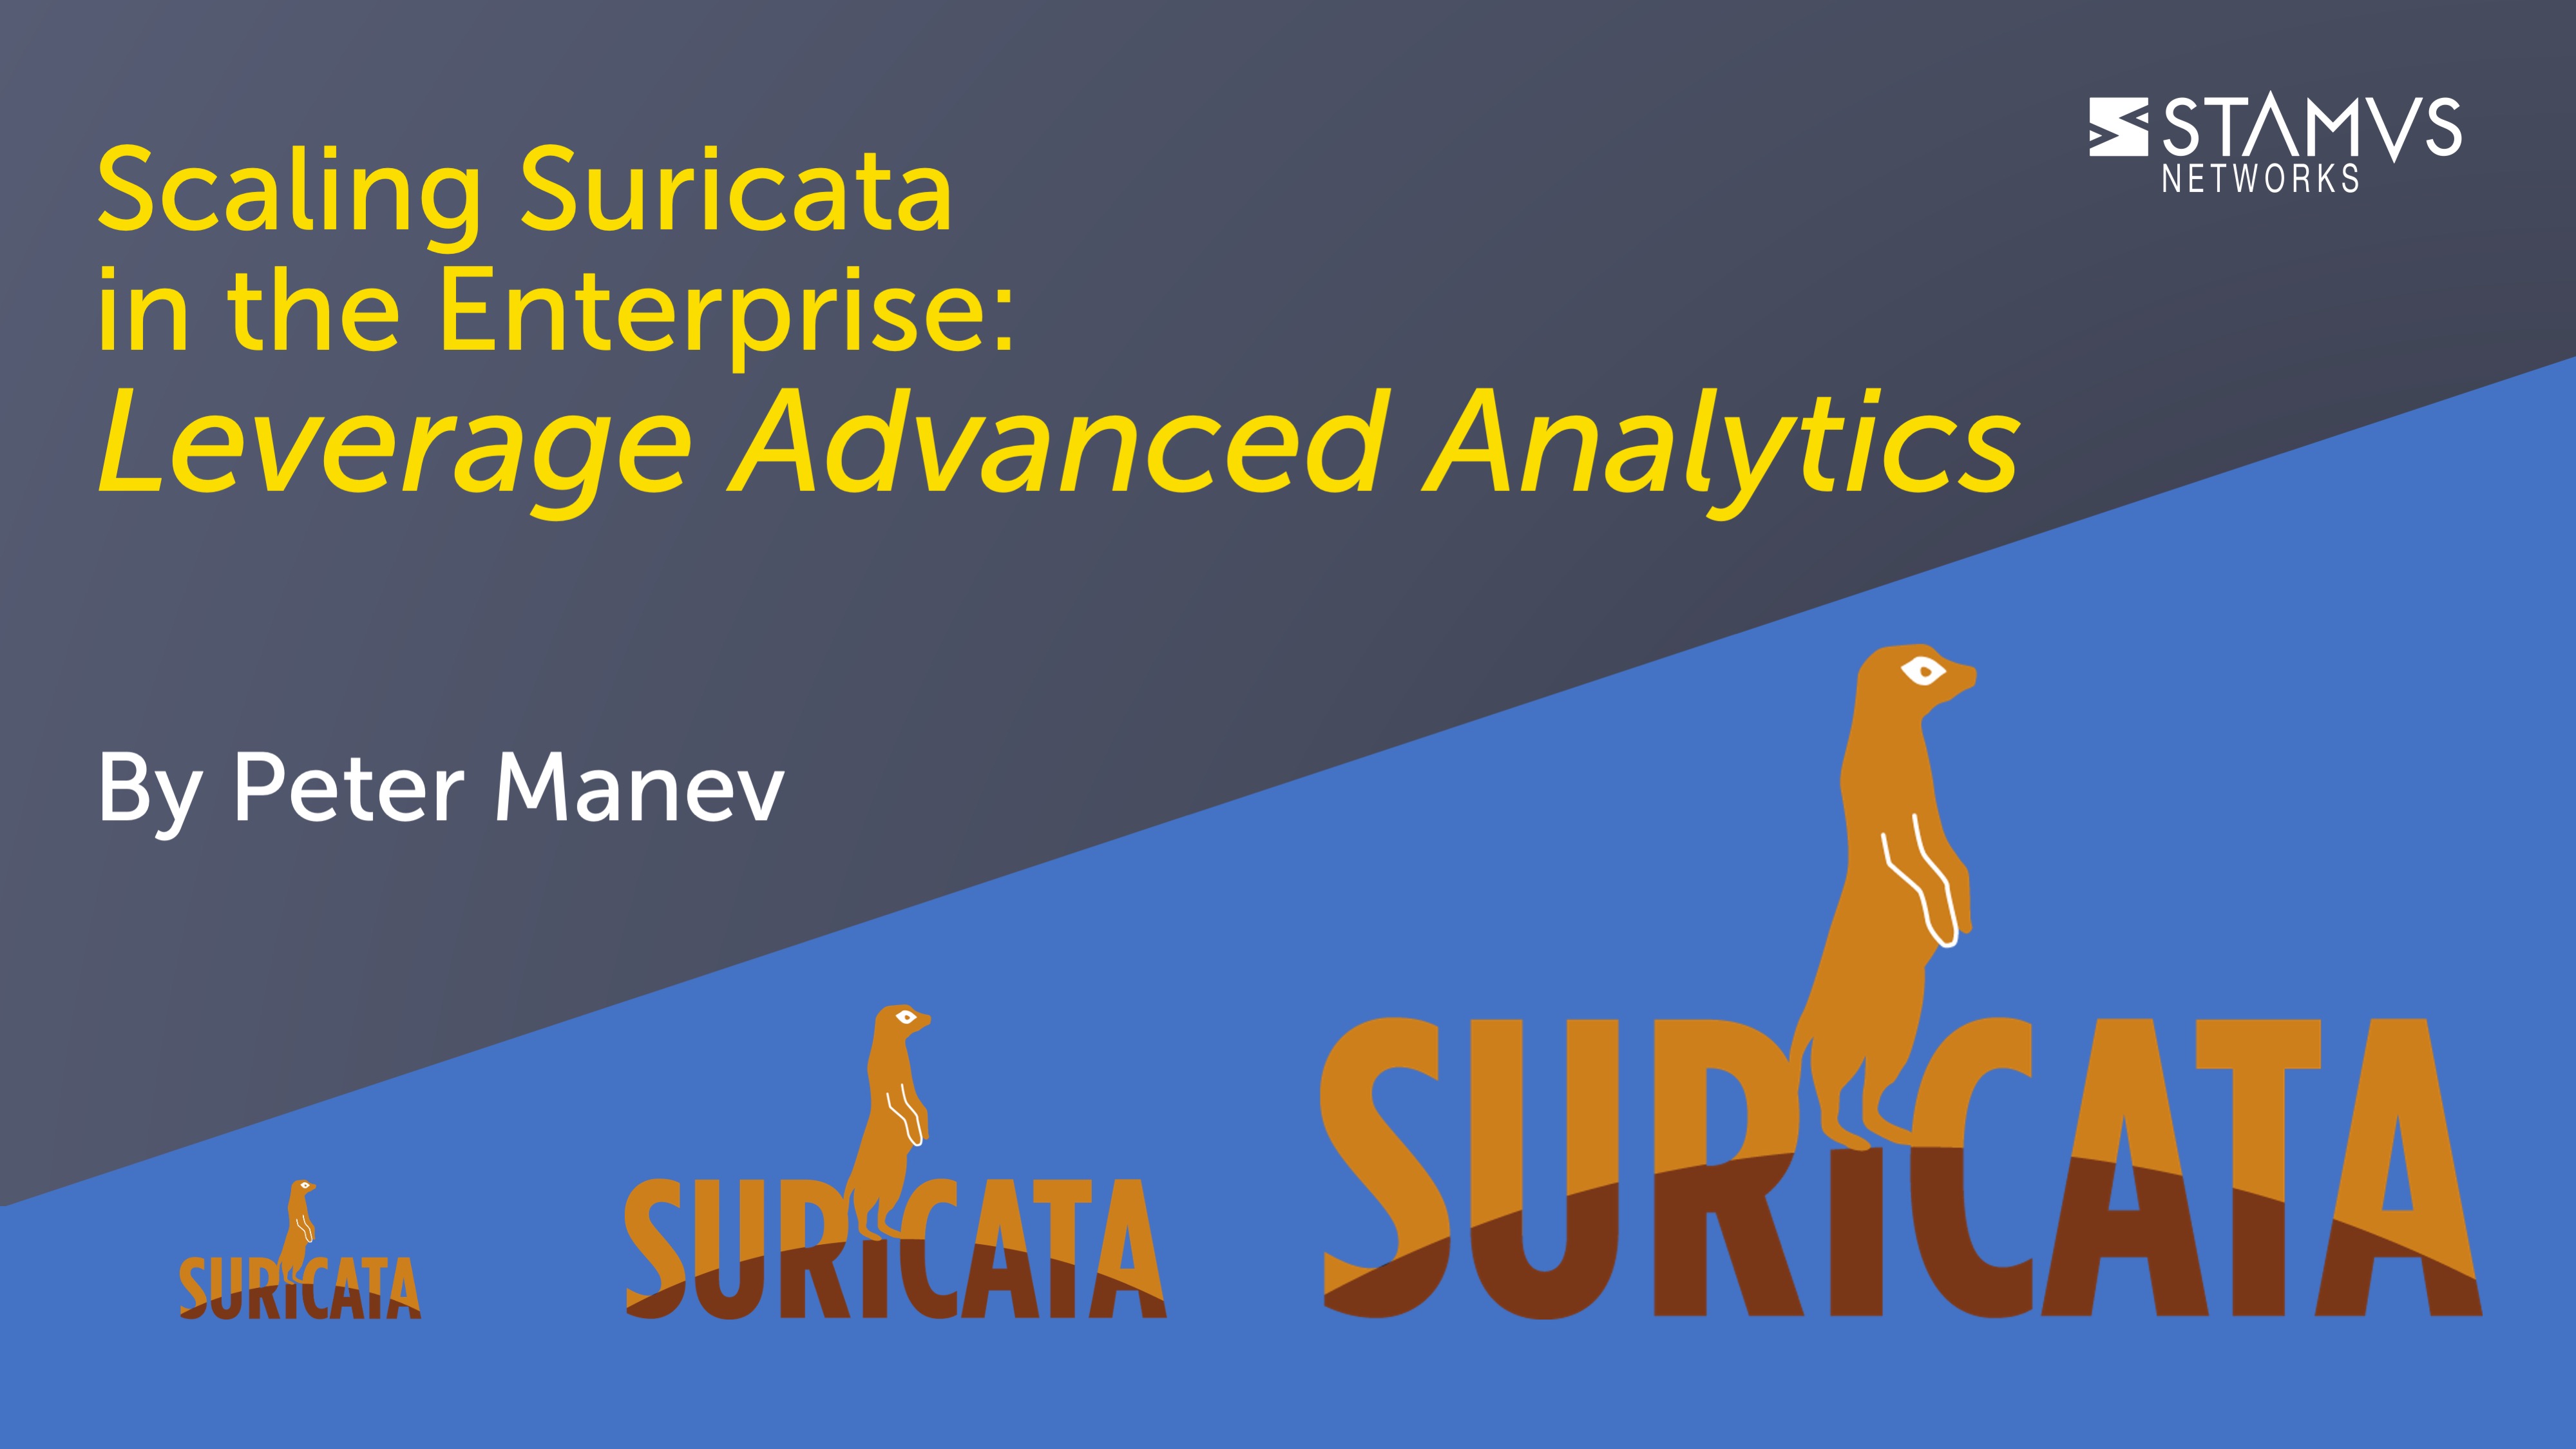  IMAGE: Scaling Suricata in the Enterprise - Leverage Advanced Analytics